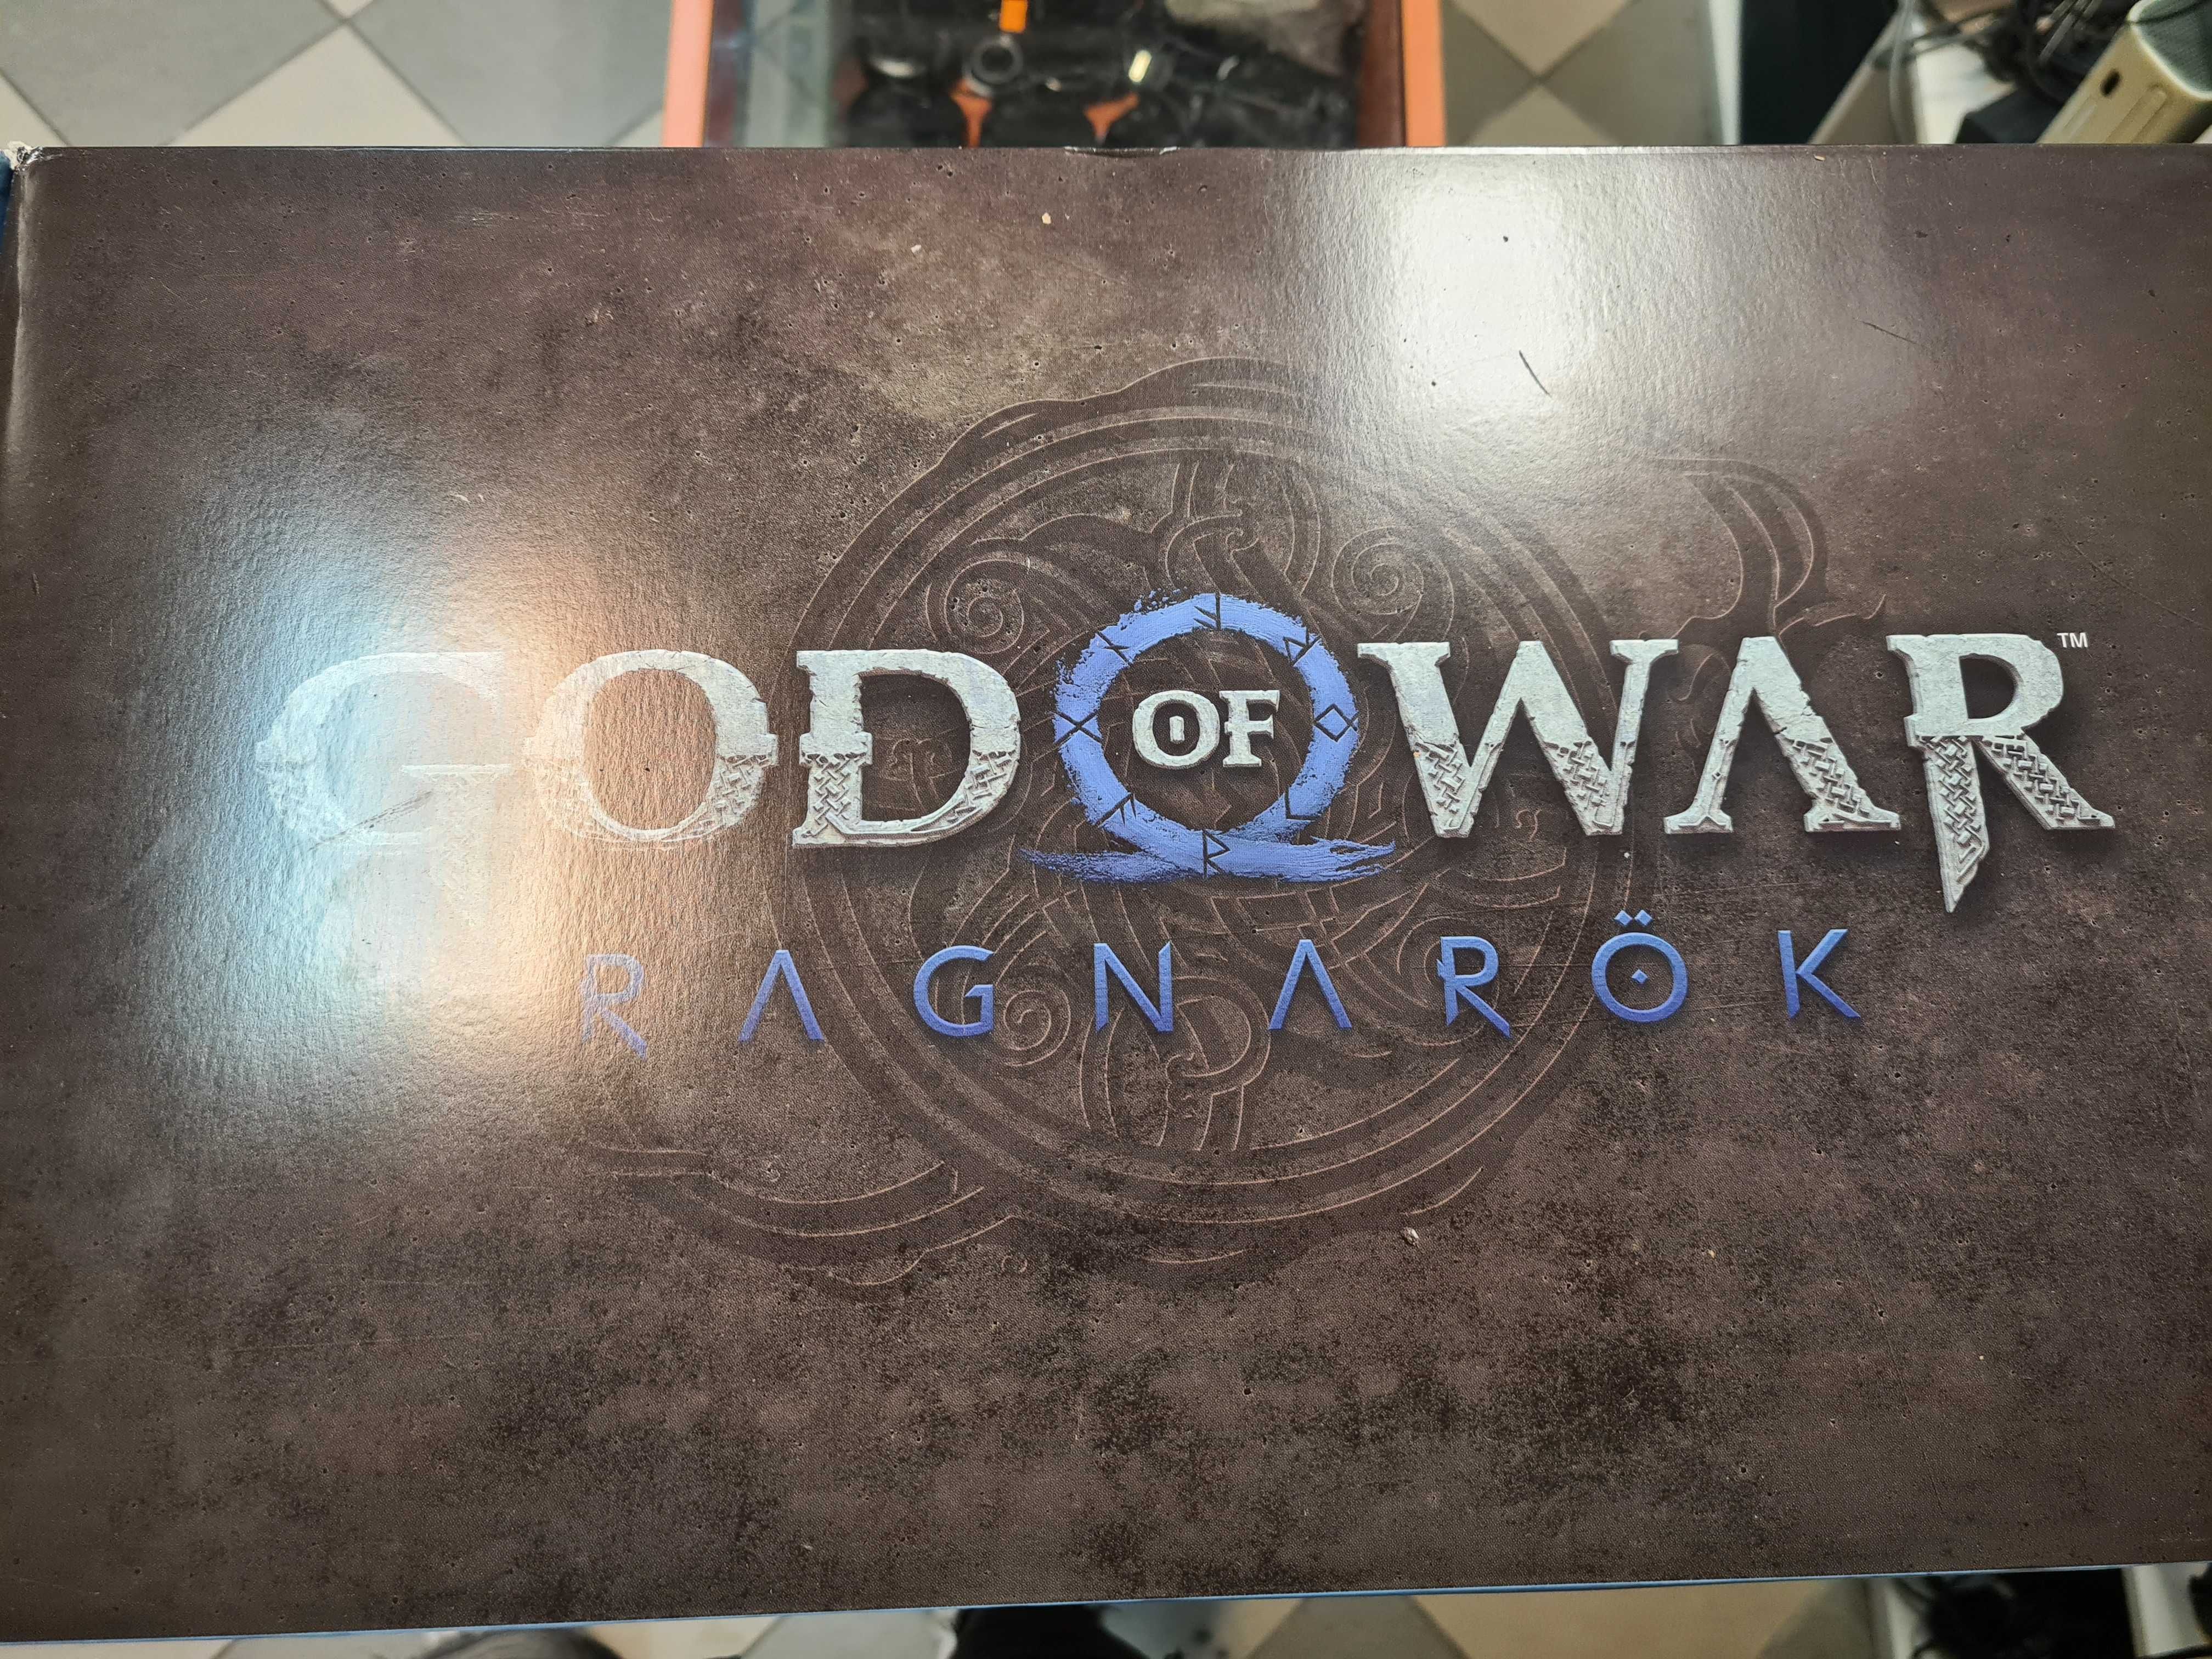 God of War: Ragnarok PS5, Edycja kolekcjonerska